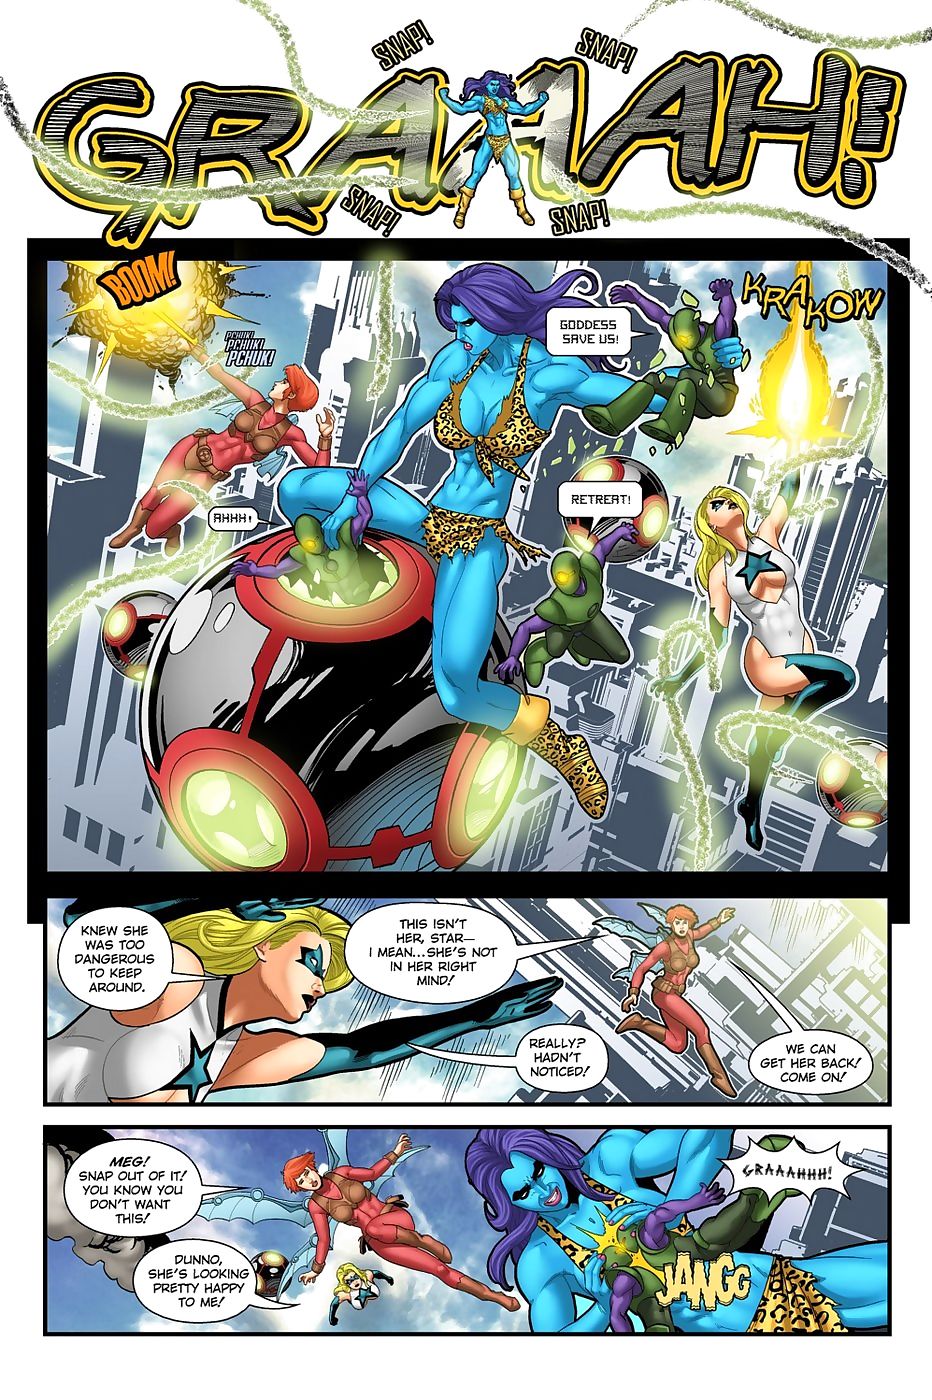 Giantness- Power Patrol 03 page 1